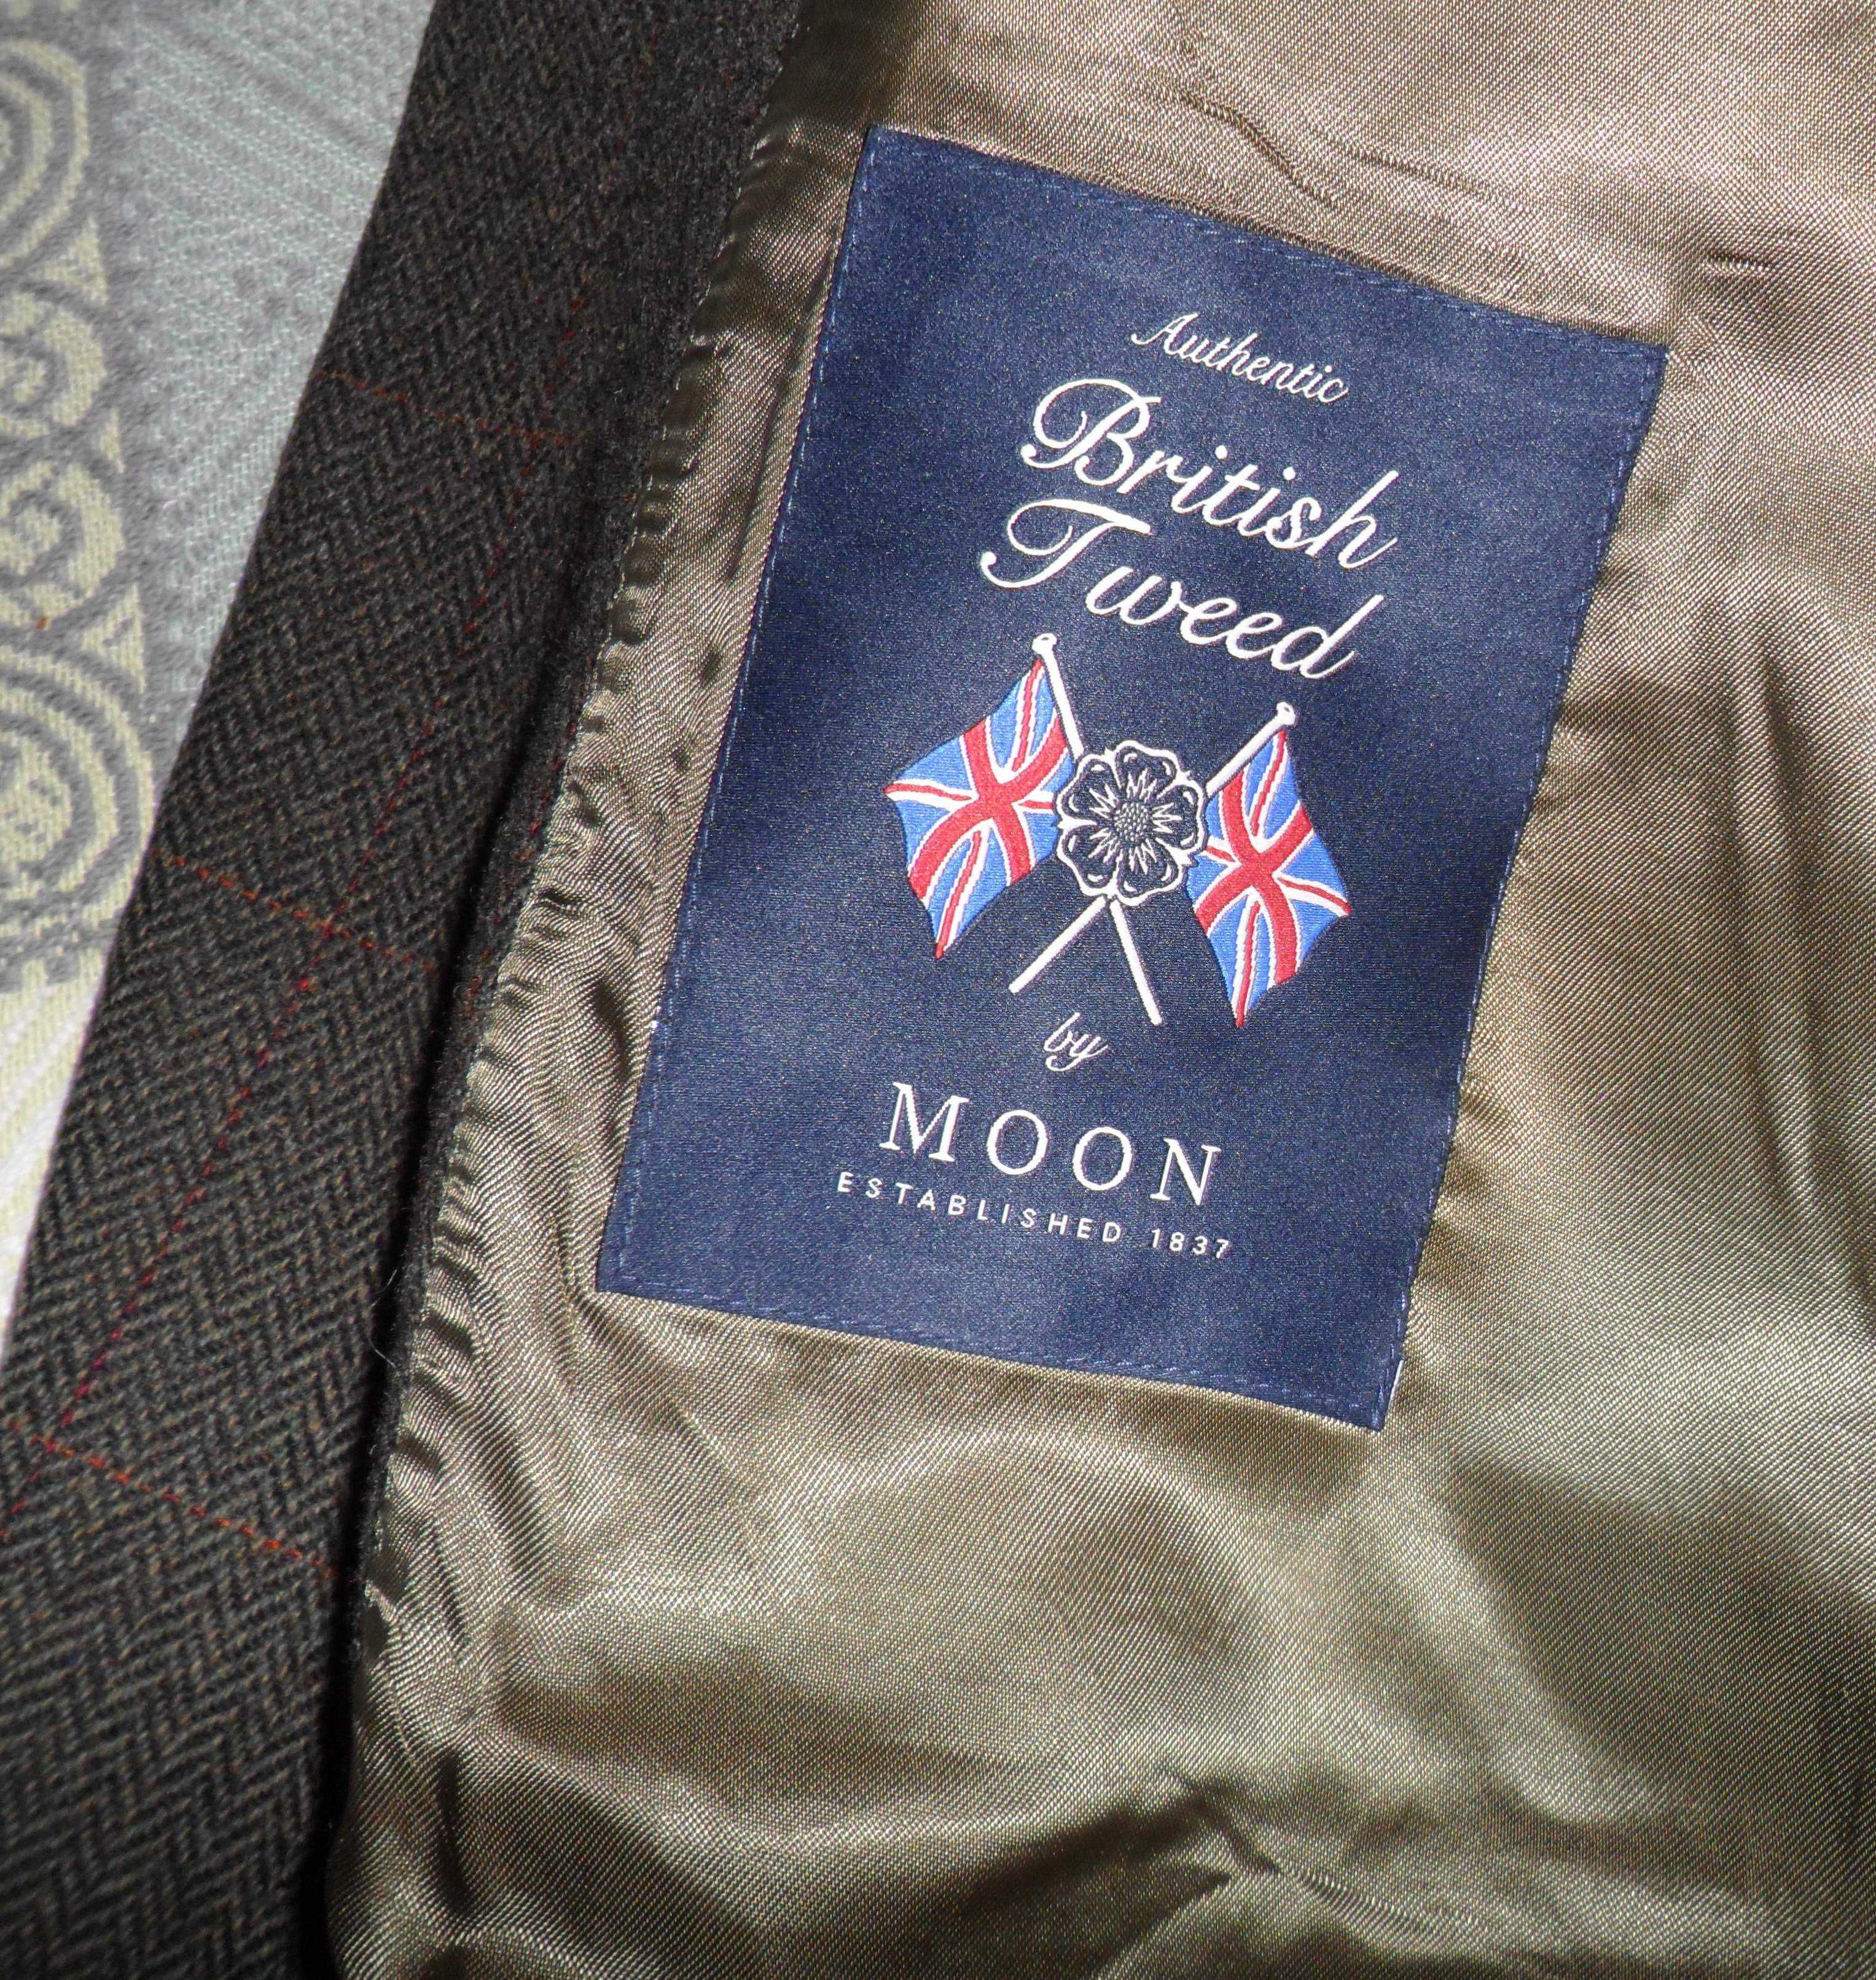 Піджак Christian Berg authentic british tweed by moon, розмір L